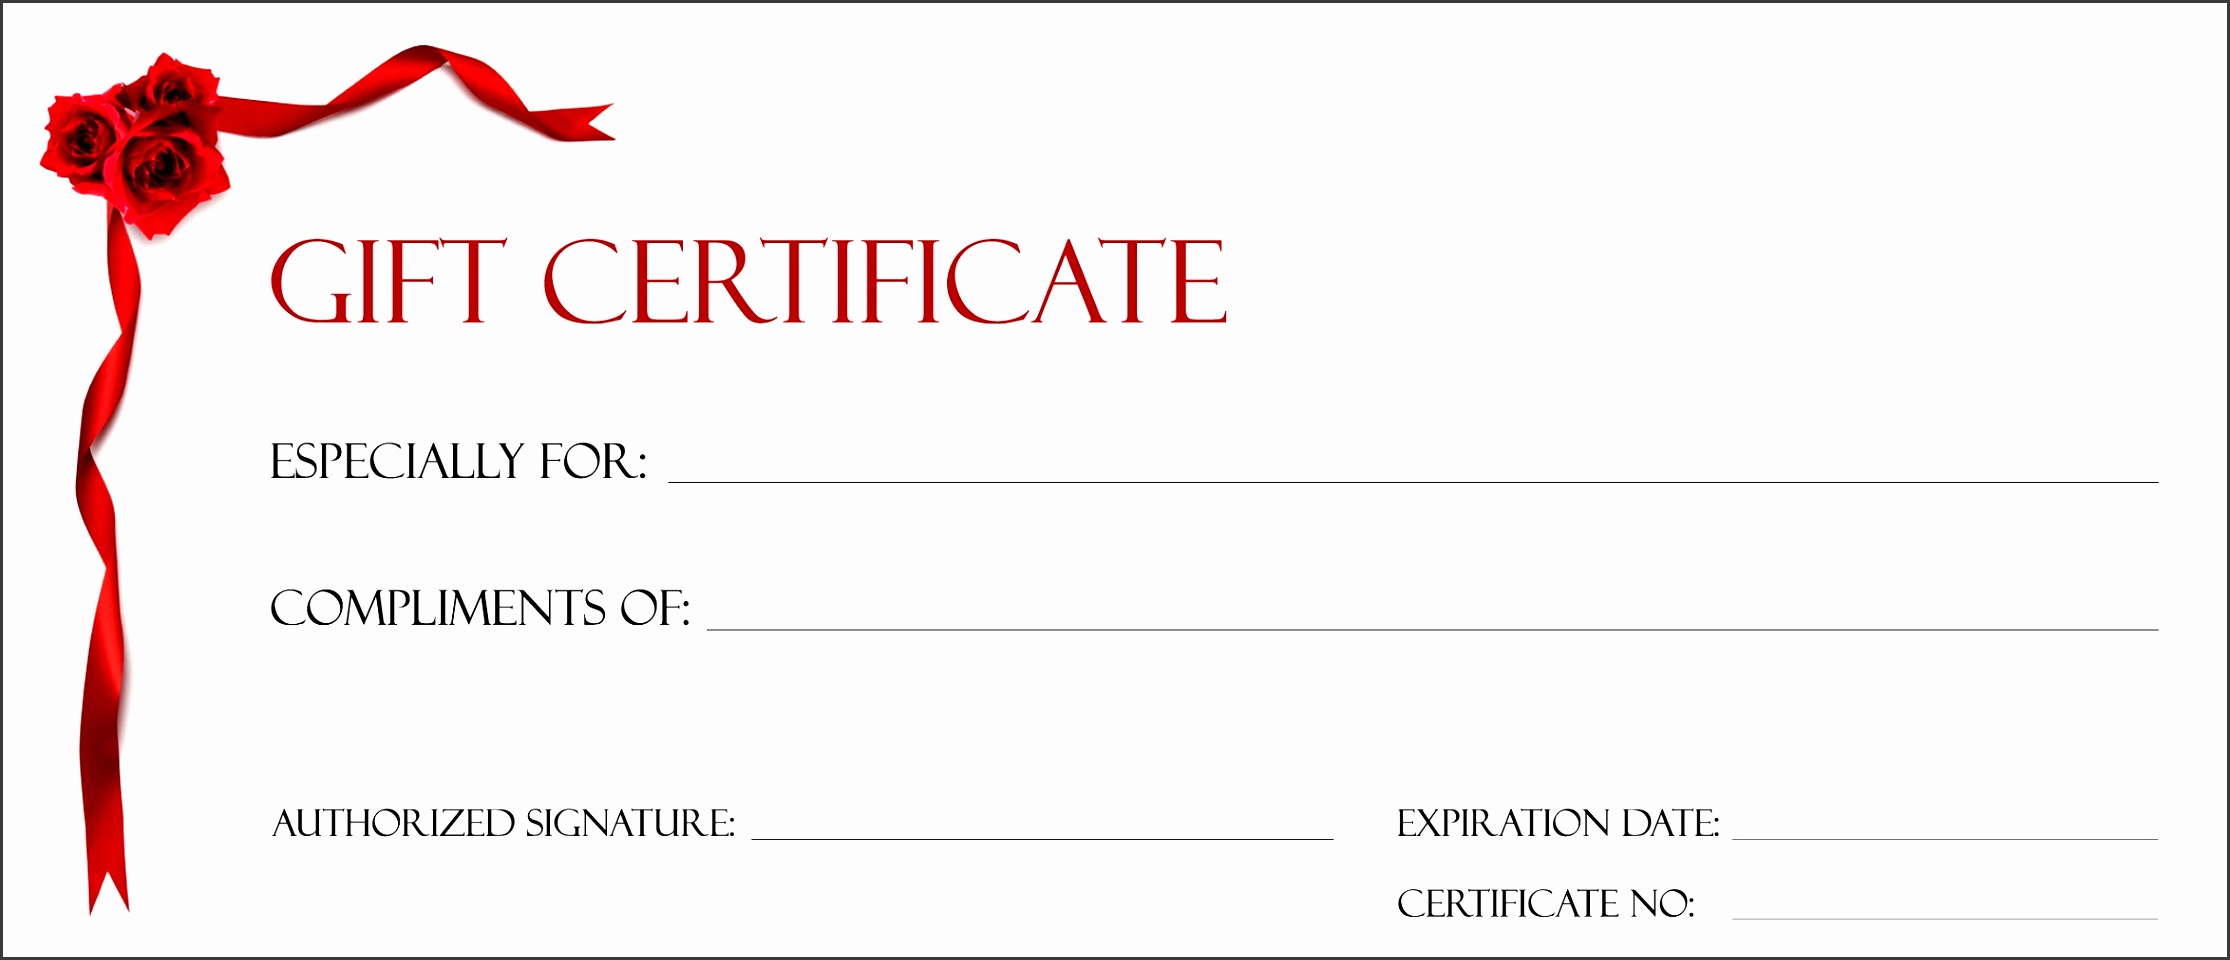 t certificate template design